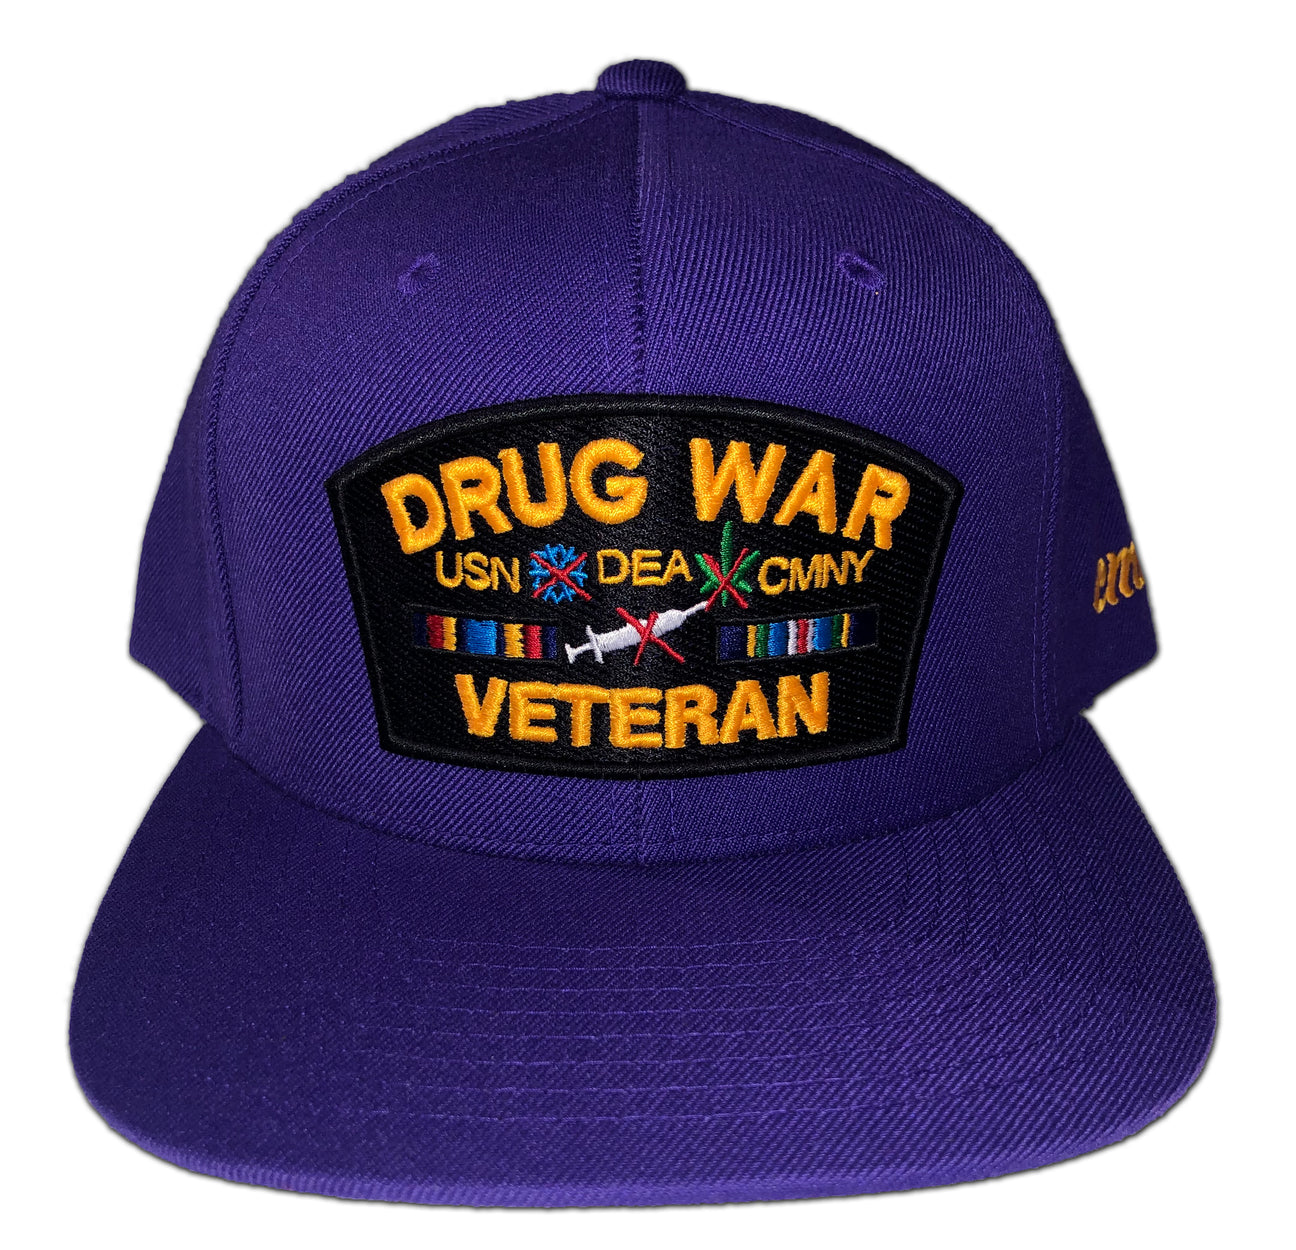 Drug War Veteran – Classic Material NY